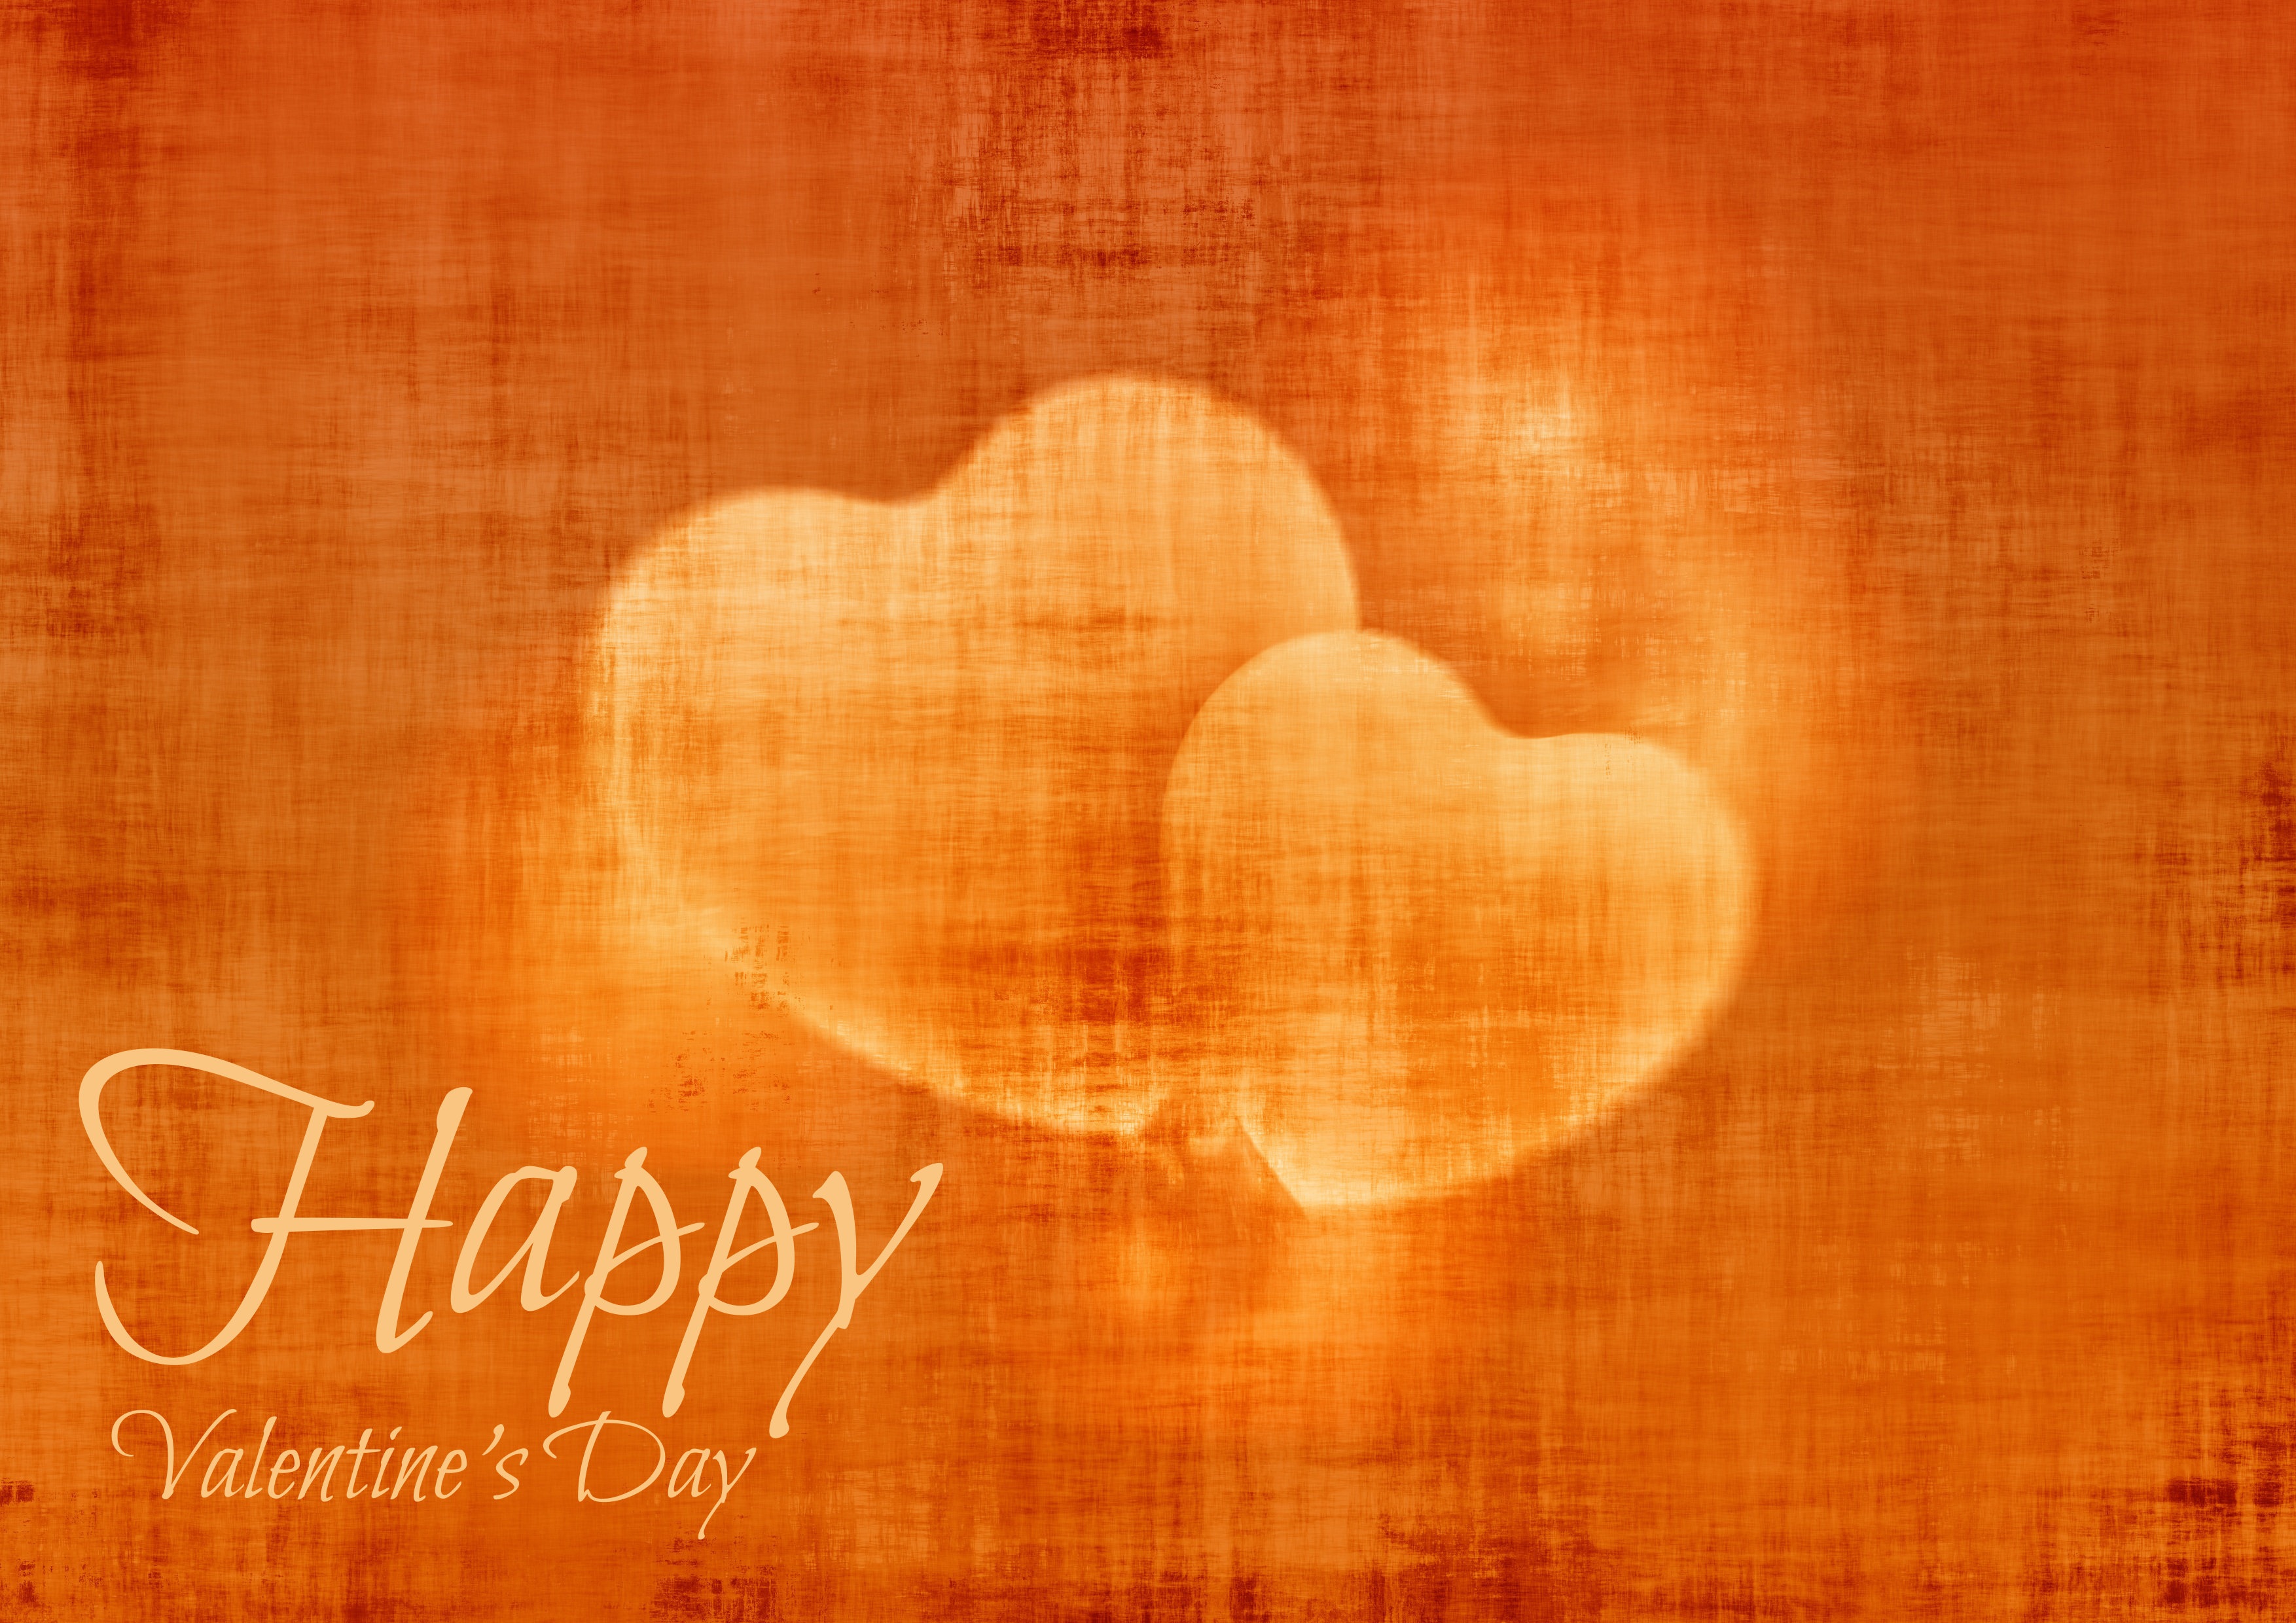 Valentine s day love free image download